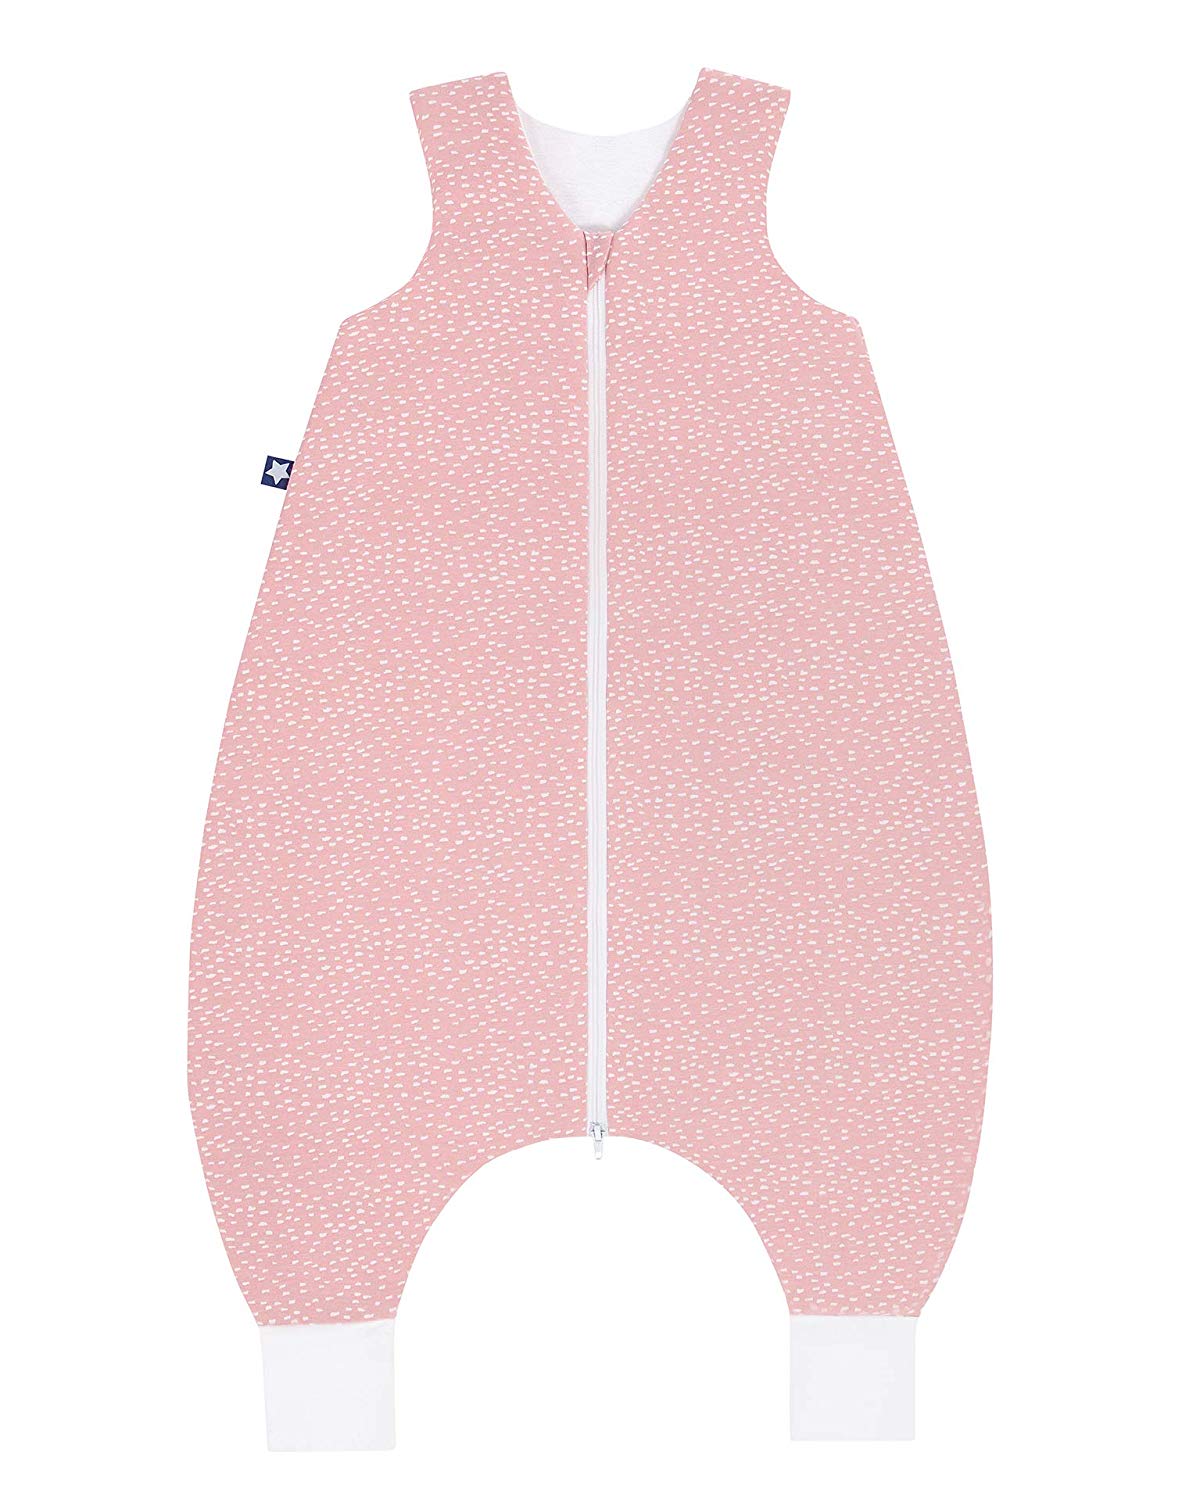 Julius Zöllner 9112569250 Summer Jumper Jersey Summer Sleeping Bag with Legs (0.5 TOG) Tiny Squares Blush Size 80 / 10-18 Months Pink